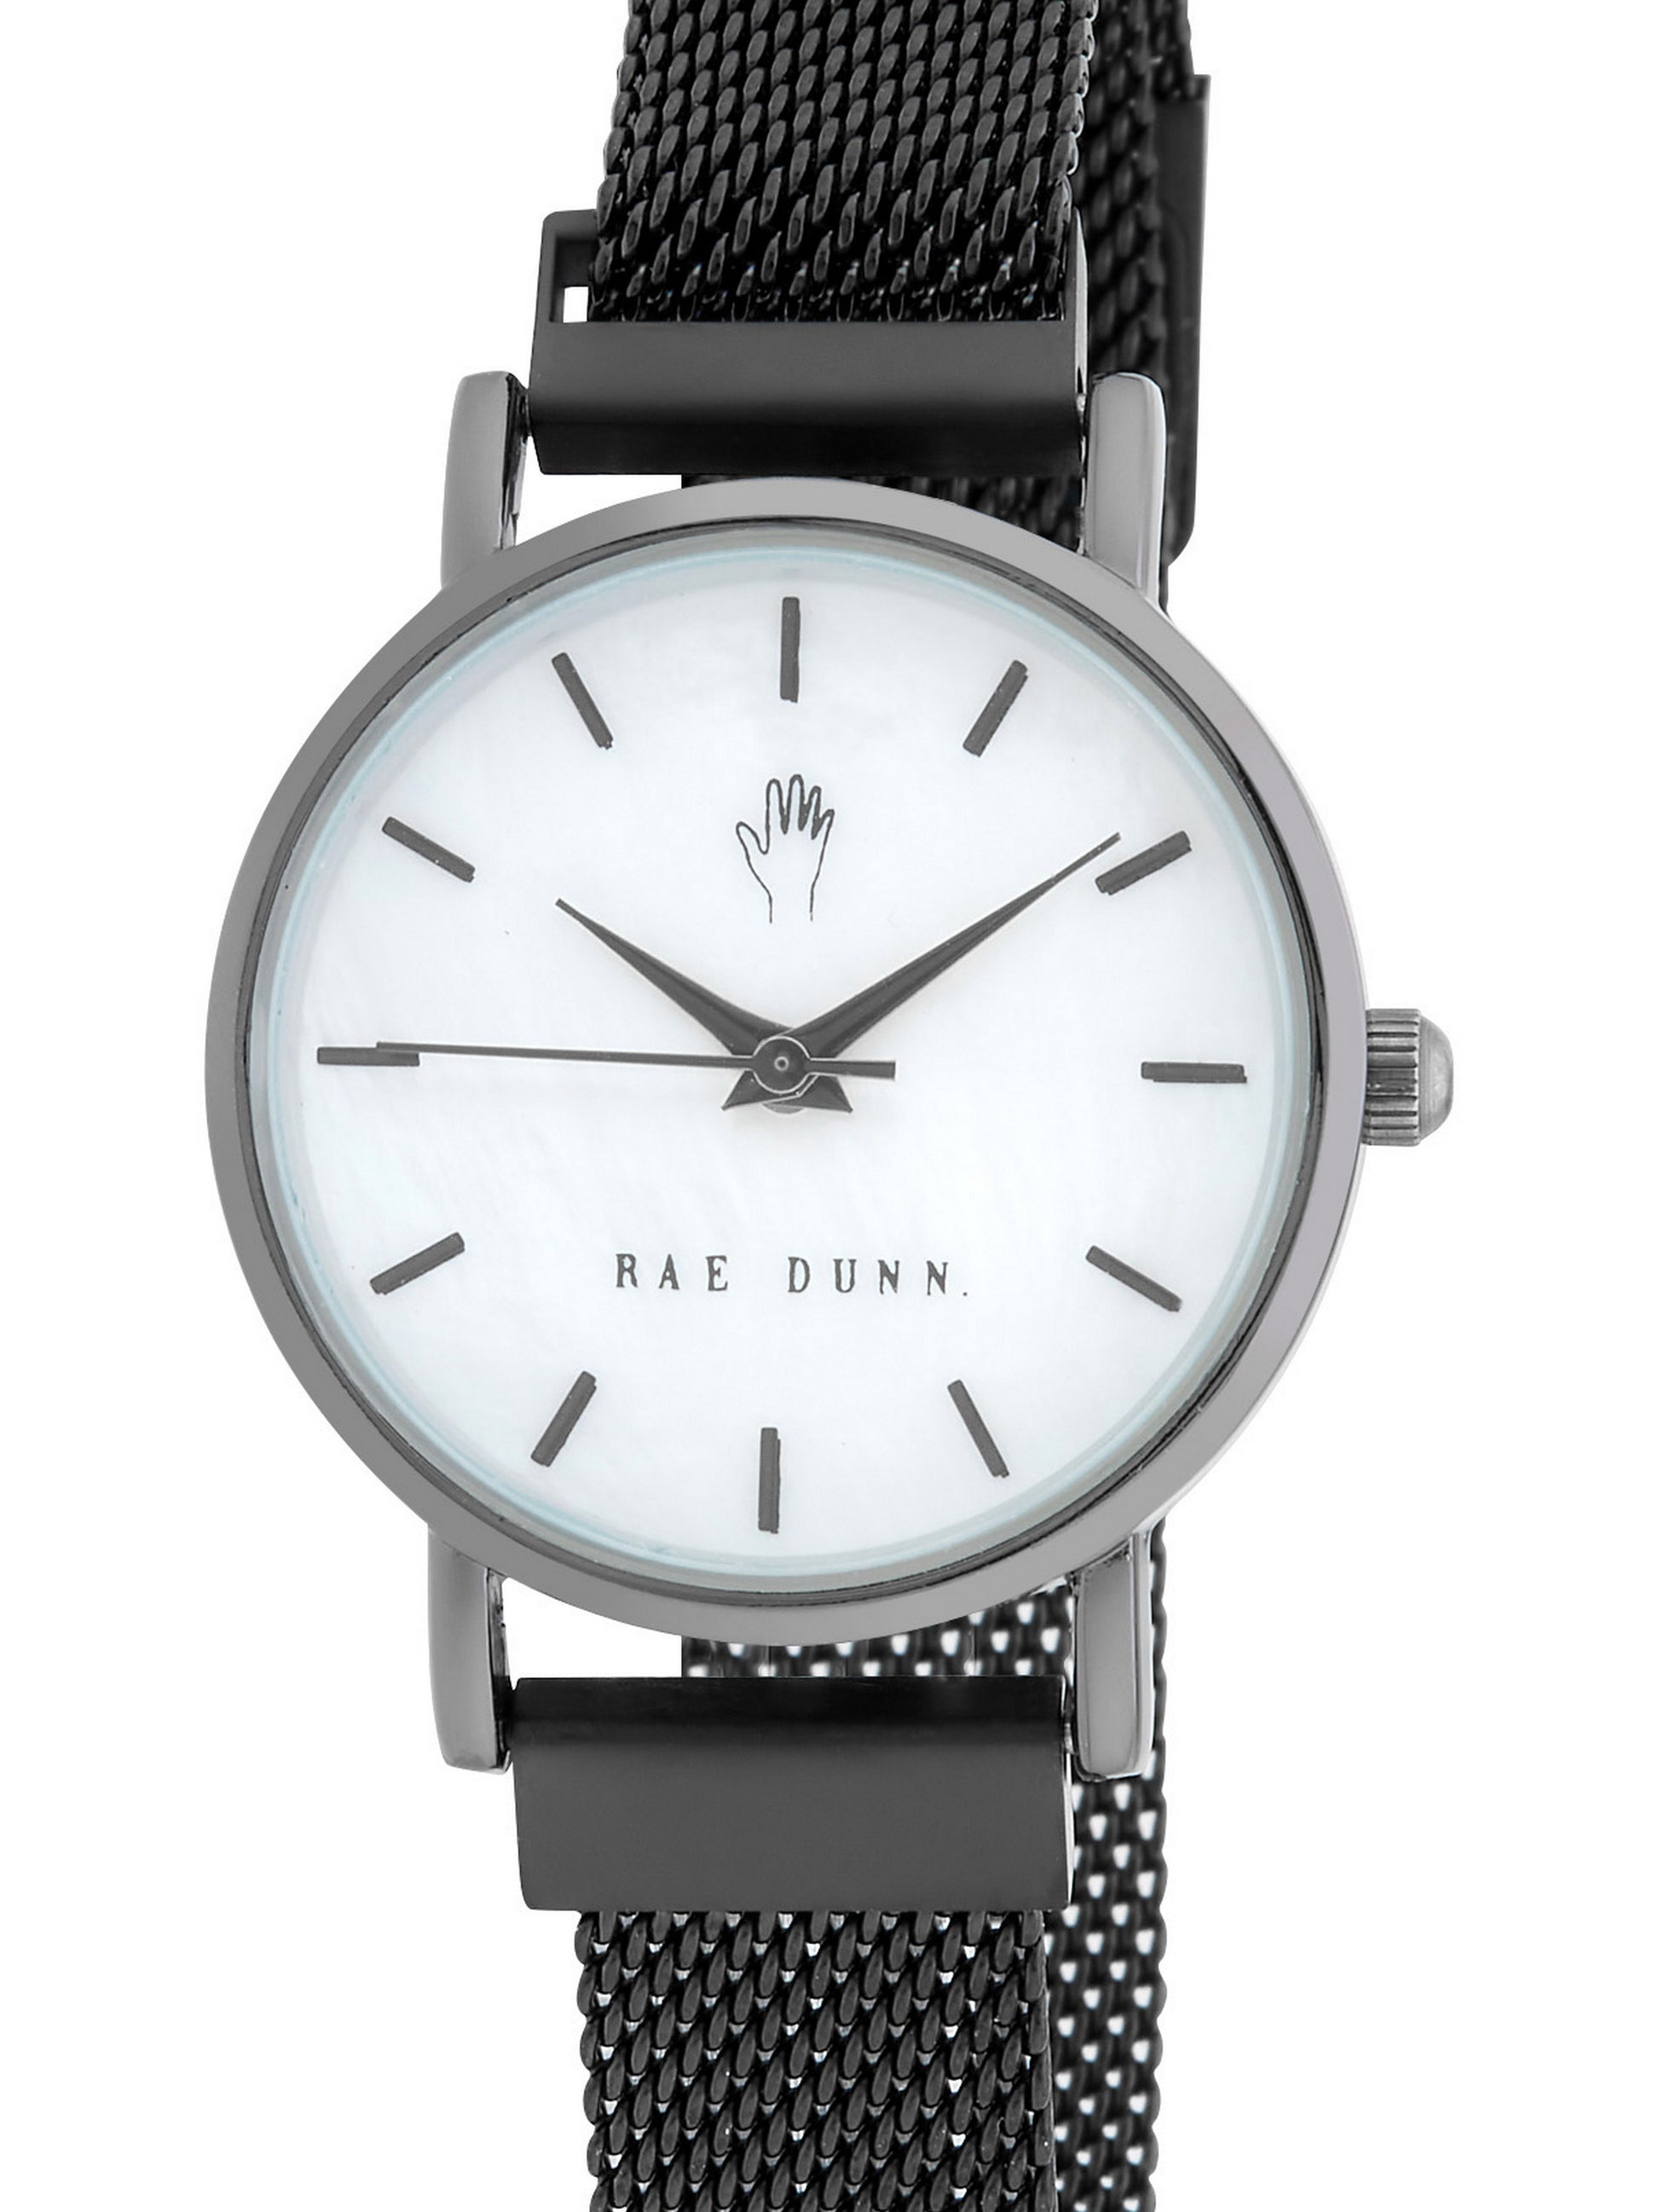 TARA Small Round Face Mesh Bracelet Watch in Black, 29mm - Rae Dunn Wear - Watch